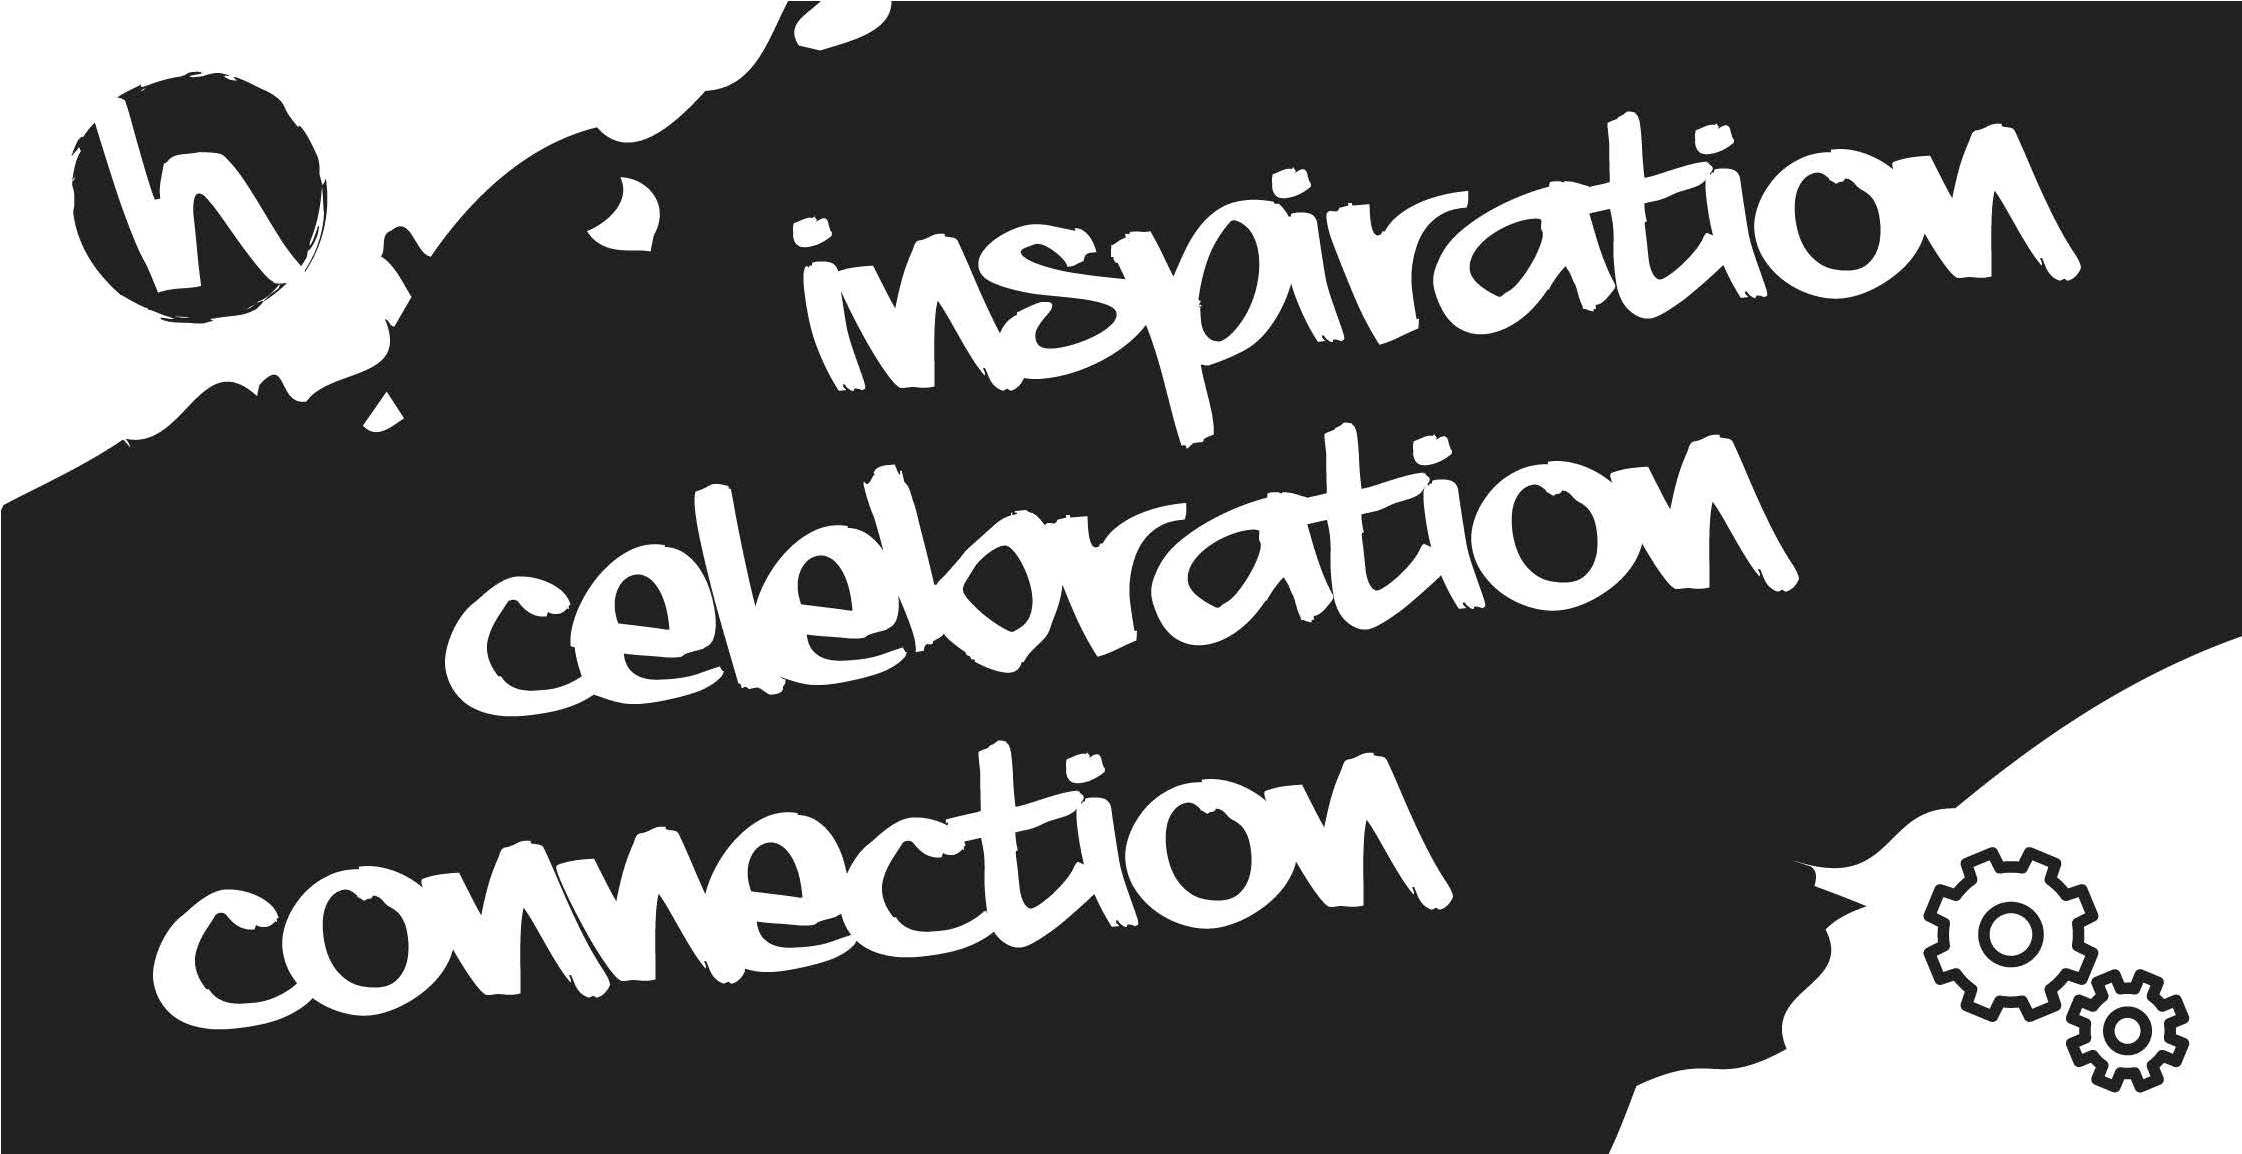 Practice Lab - Inspiration, Celebration, Connection